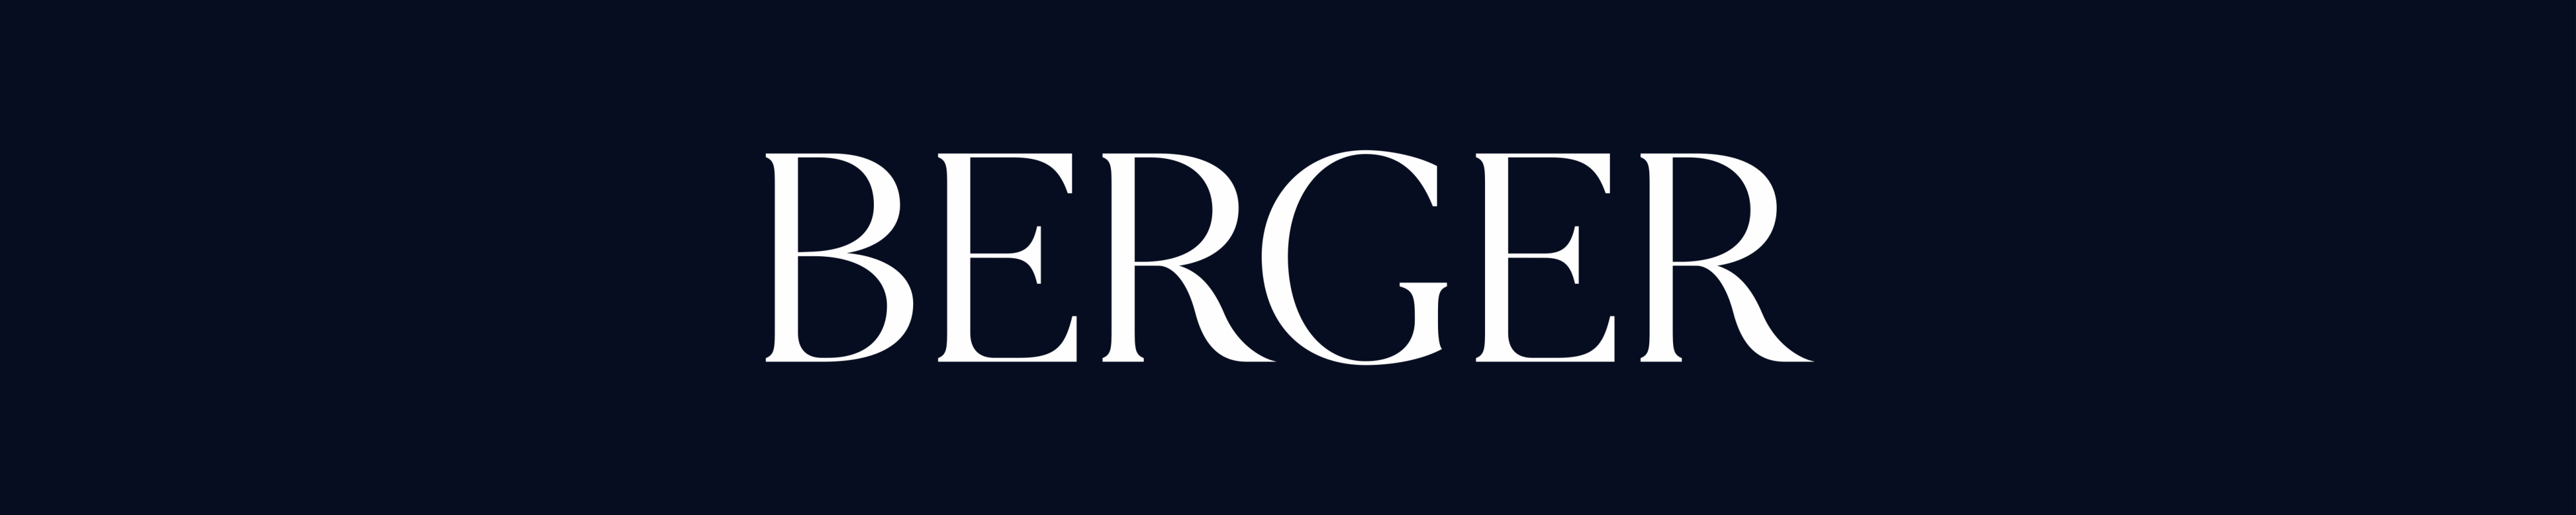 Logo Berger1